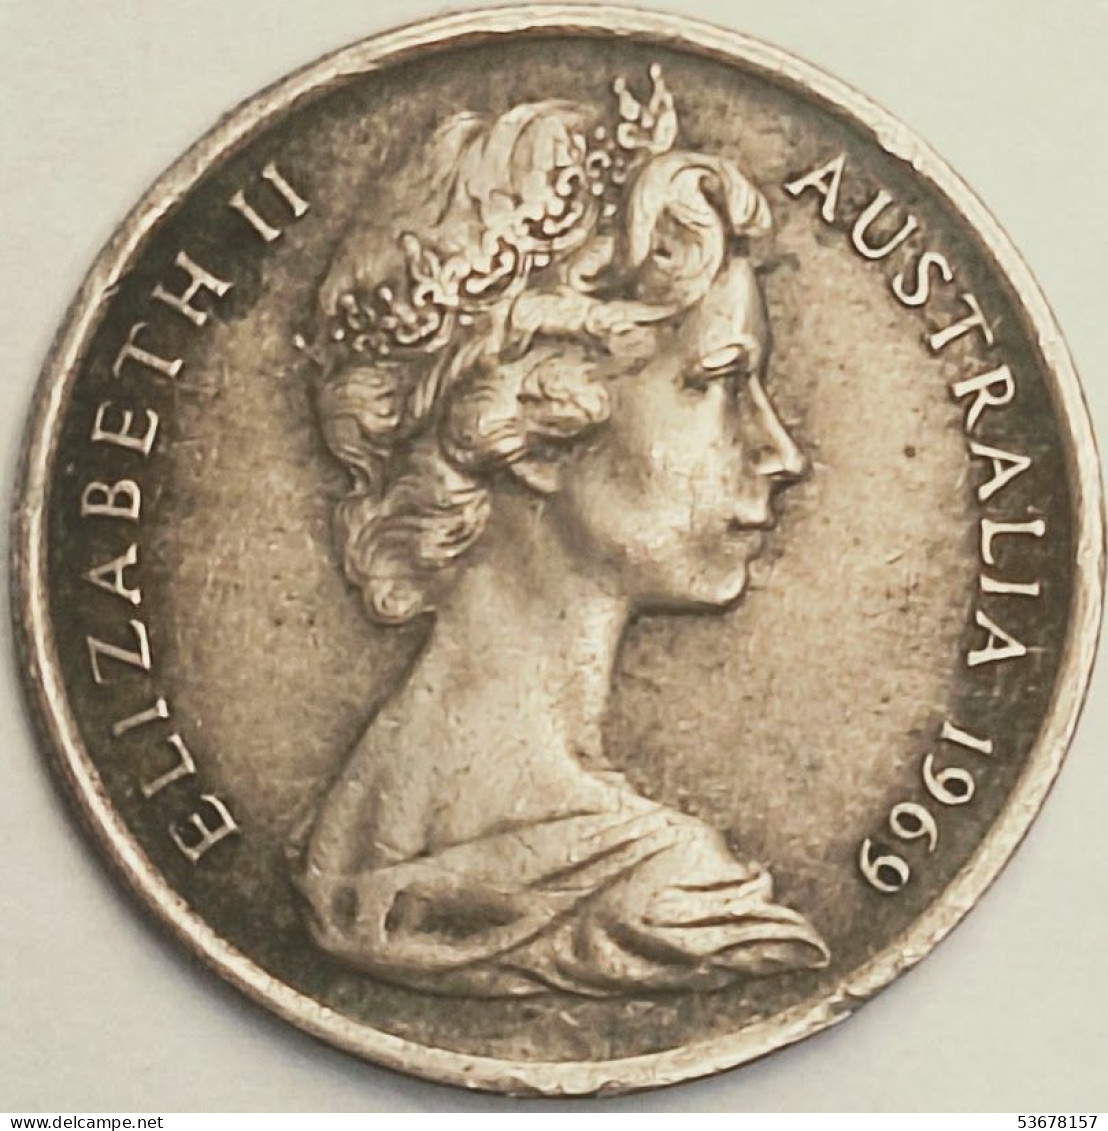 Australia - 5 Cents 1969, KM# 64 (#2798) - 5 Cents